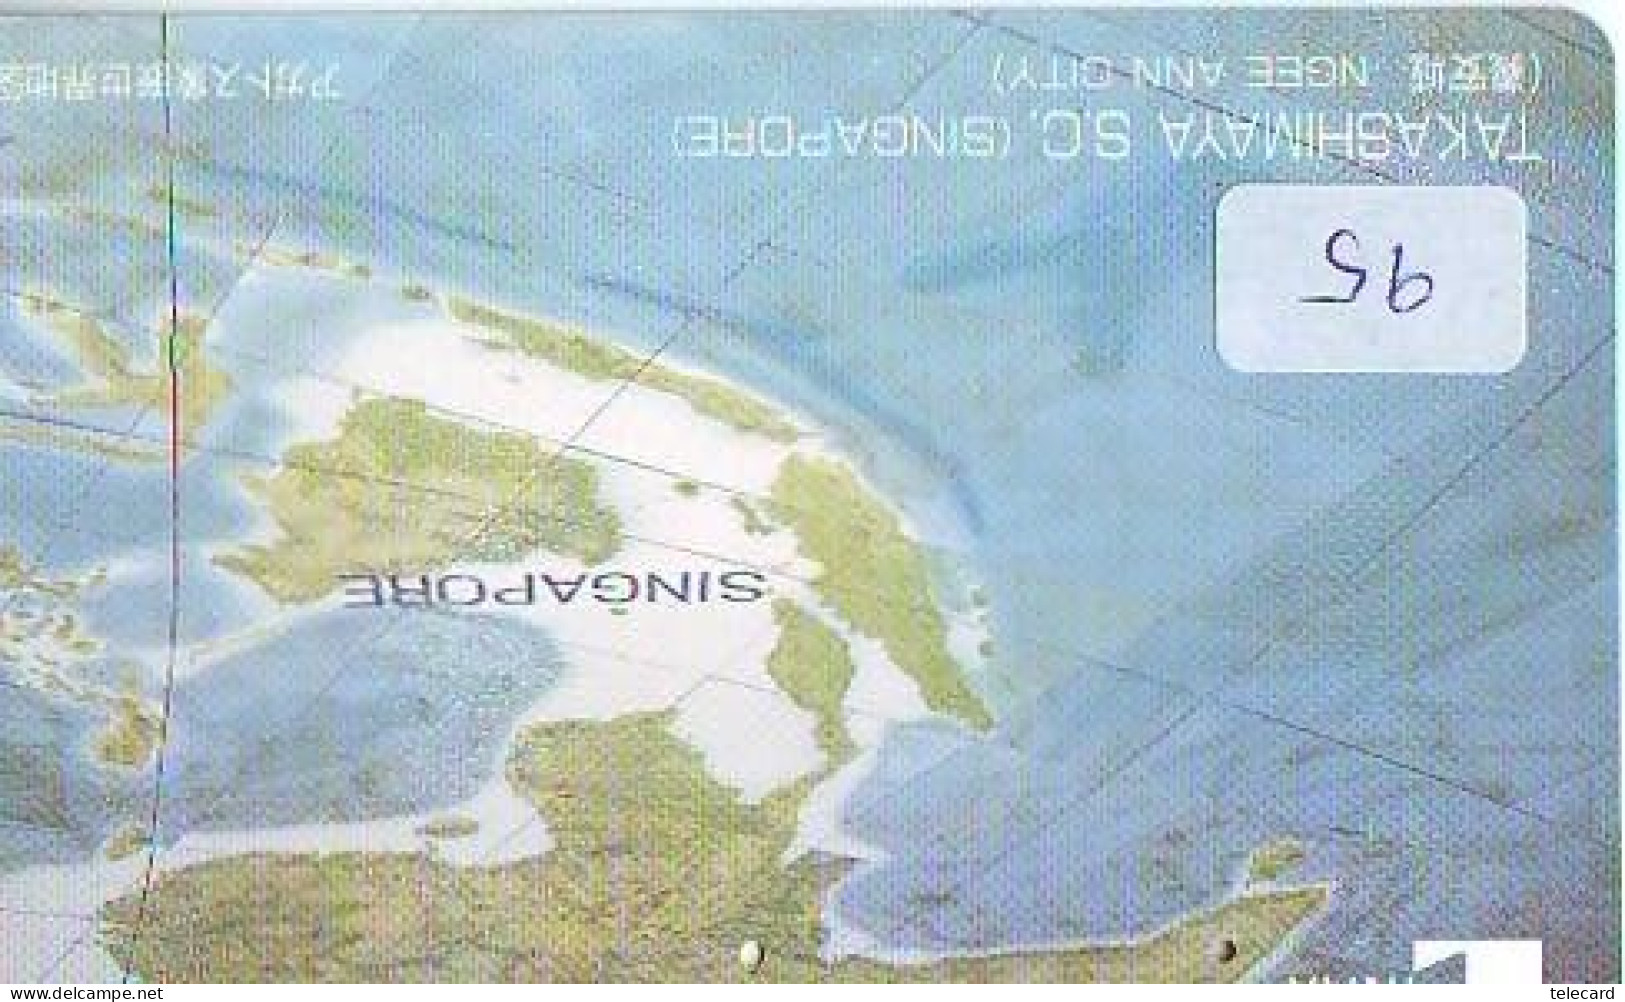 Telecarte SINGAPORE Reliée (95) - Telefonkarte SINGAPORE Verbunden - Phonecard SINGAPORE Related - Japan - Paesaggi